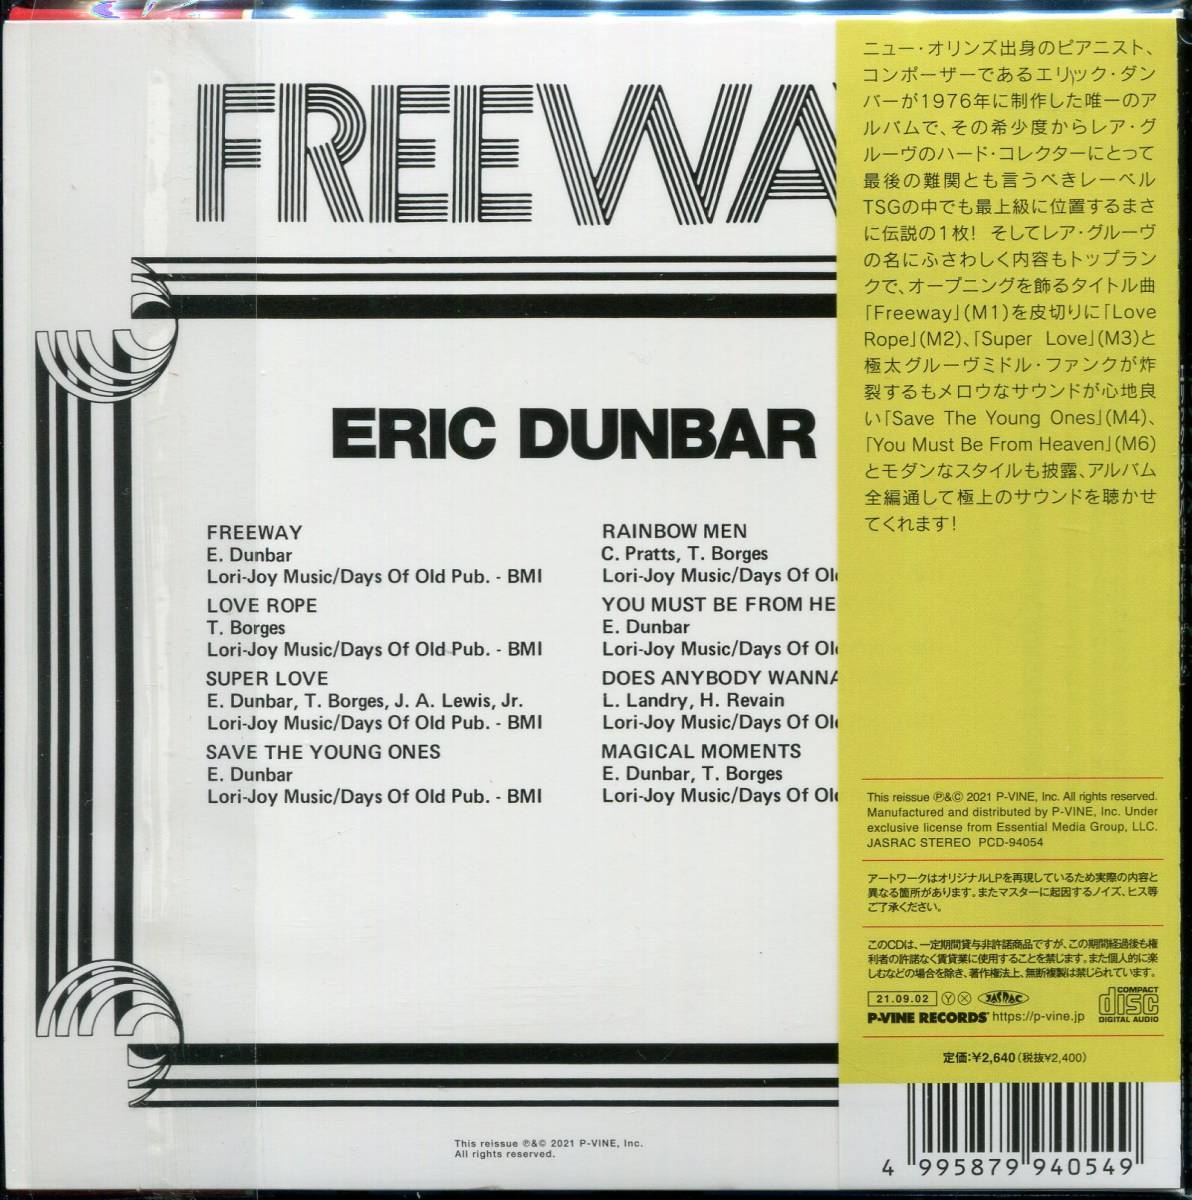 Rare Groove/ファンク/ソウル■ERIC DUNBAR / Freeway (1976) 廃盤 紙ジャケット仕様 AtoZディスクガイド掲載作!! 世界唯一のCD化盤!!の画像2